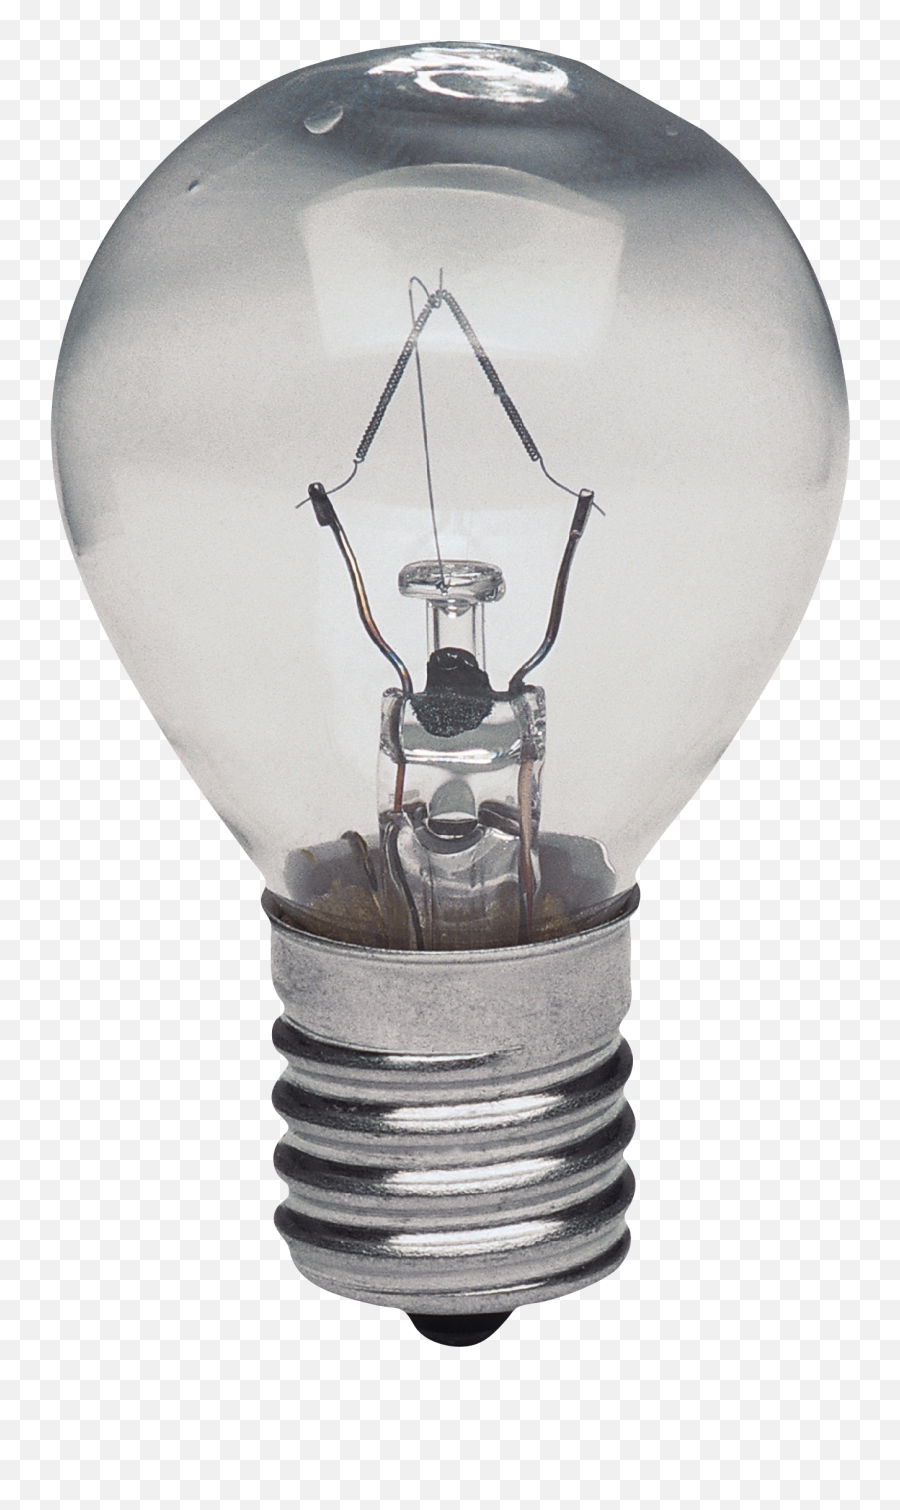 Bulb Light Png Image Free Picture Download Lightbulb Transparent Background